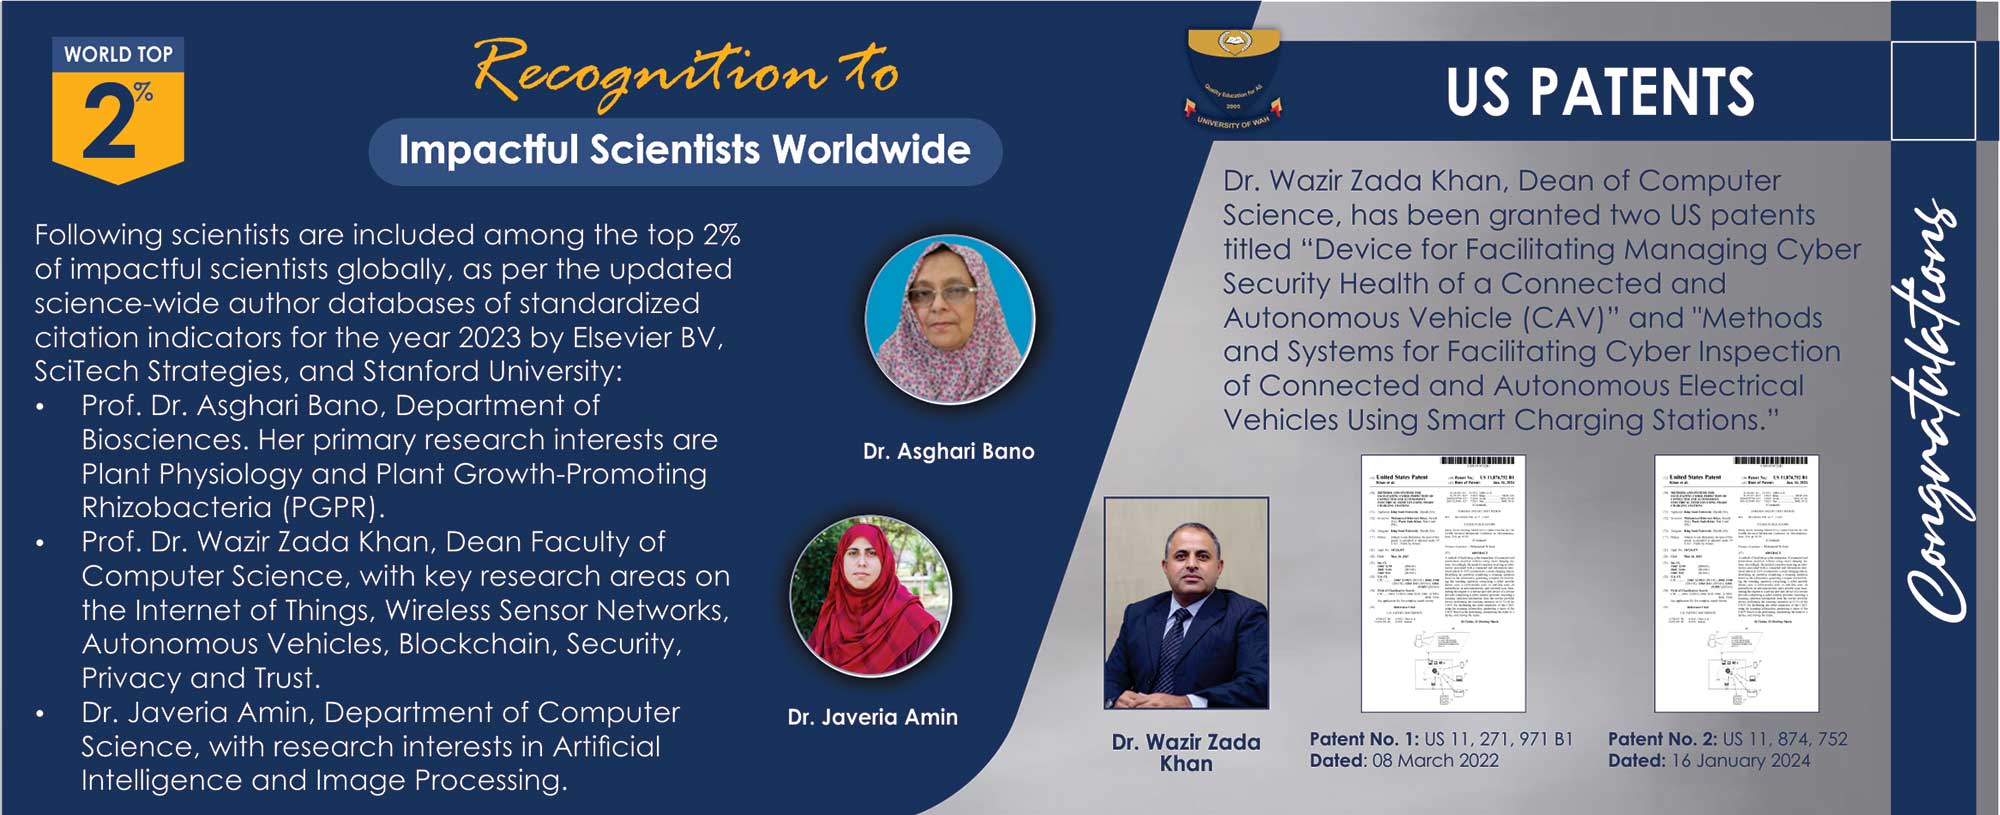 Asghri Bano Award/Dr. Wazir Zada Khan/Dr. Javeria Amin